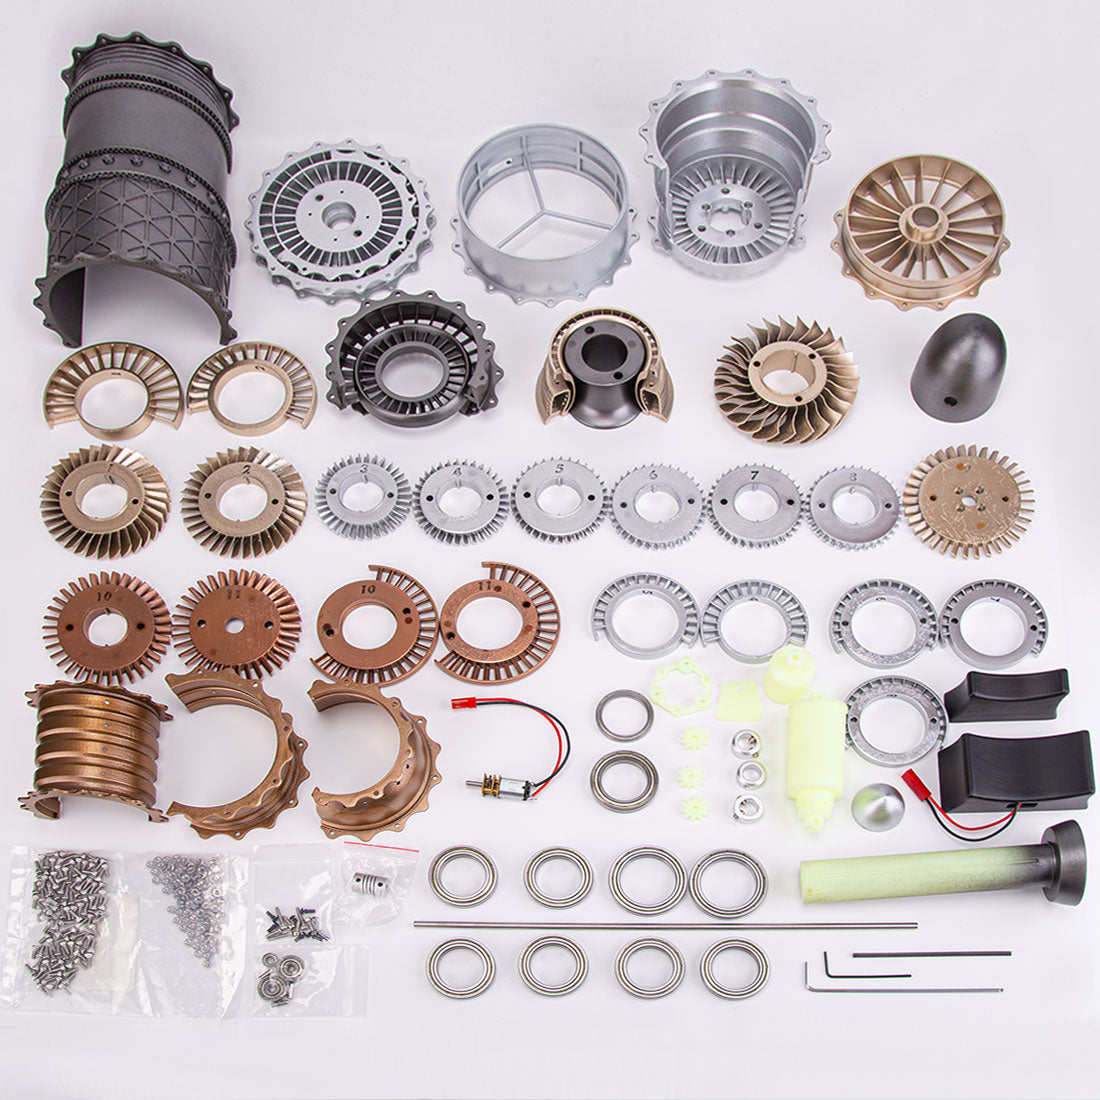 1/20 Turbofan Engine Model Kit - Build Your Own Turbofan Engine that Works - WS-15 DIY Turbofan Frighter Engine 150+Pcs